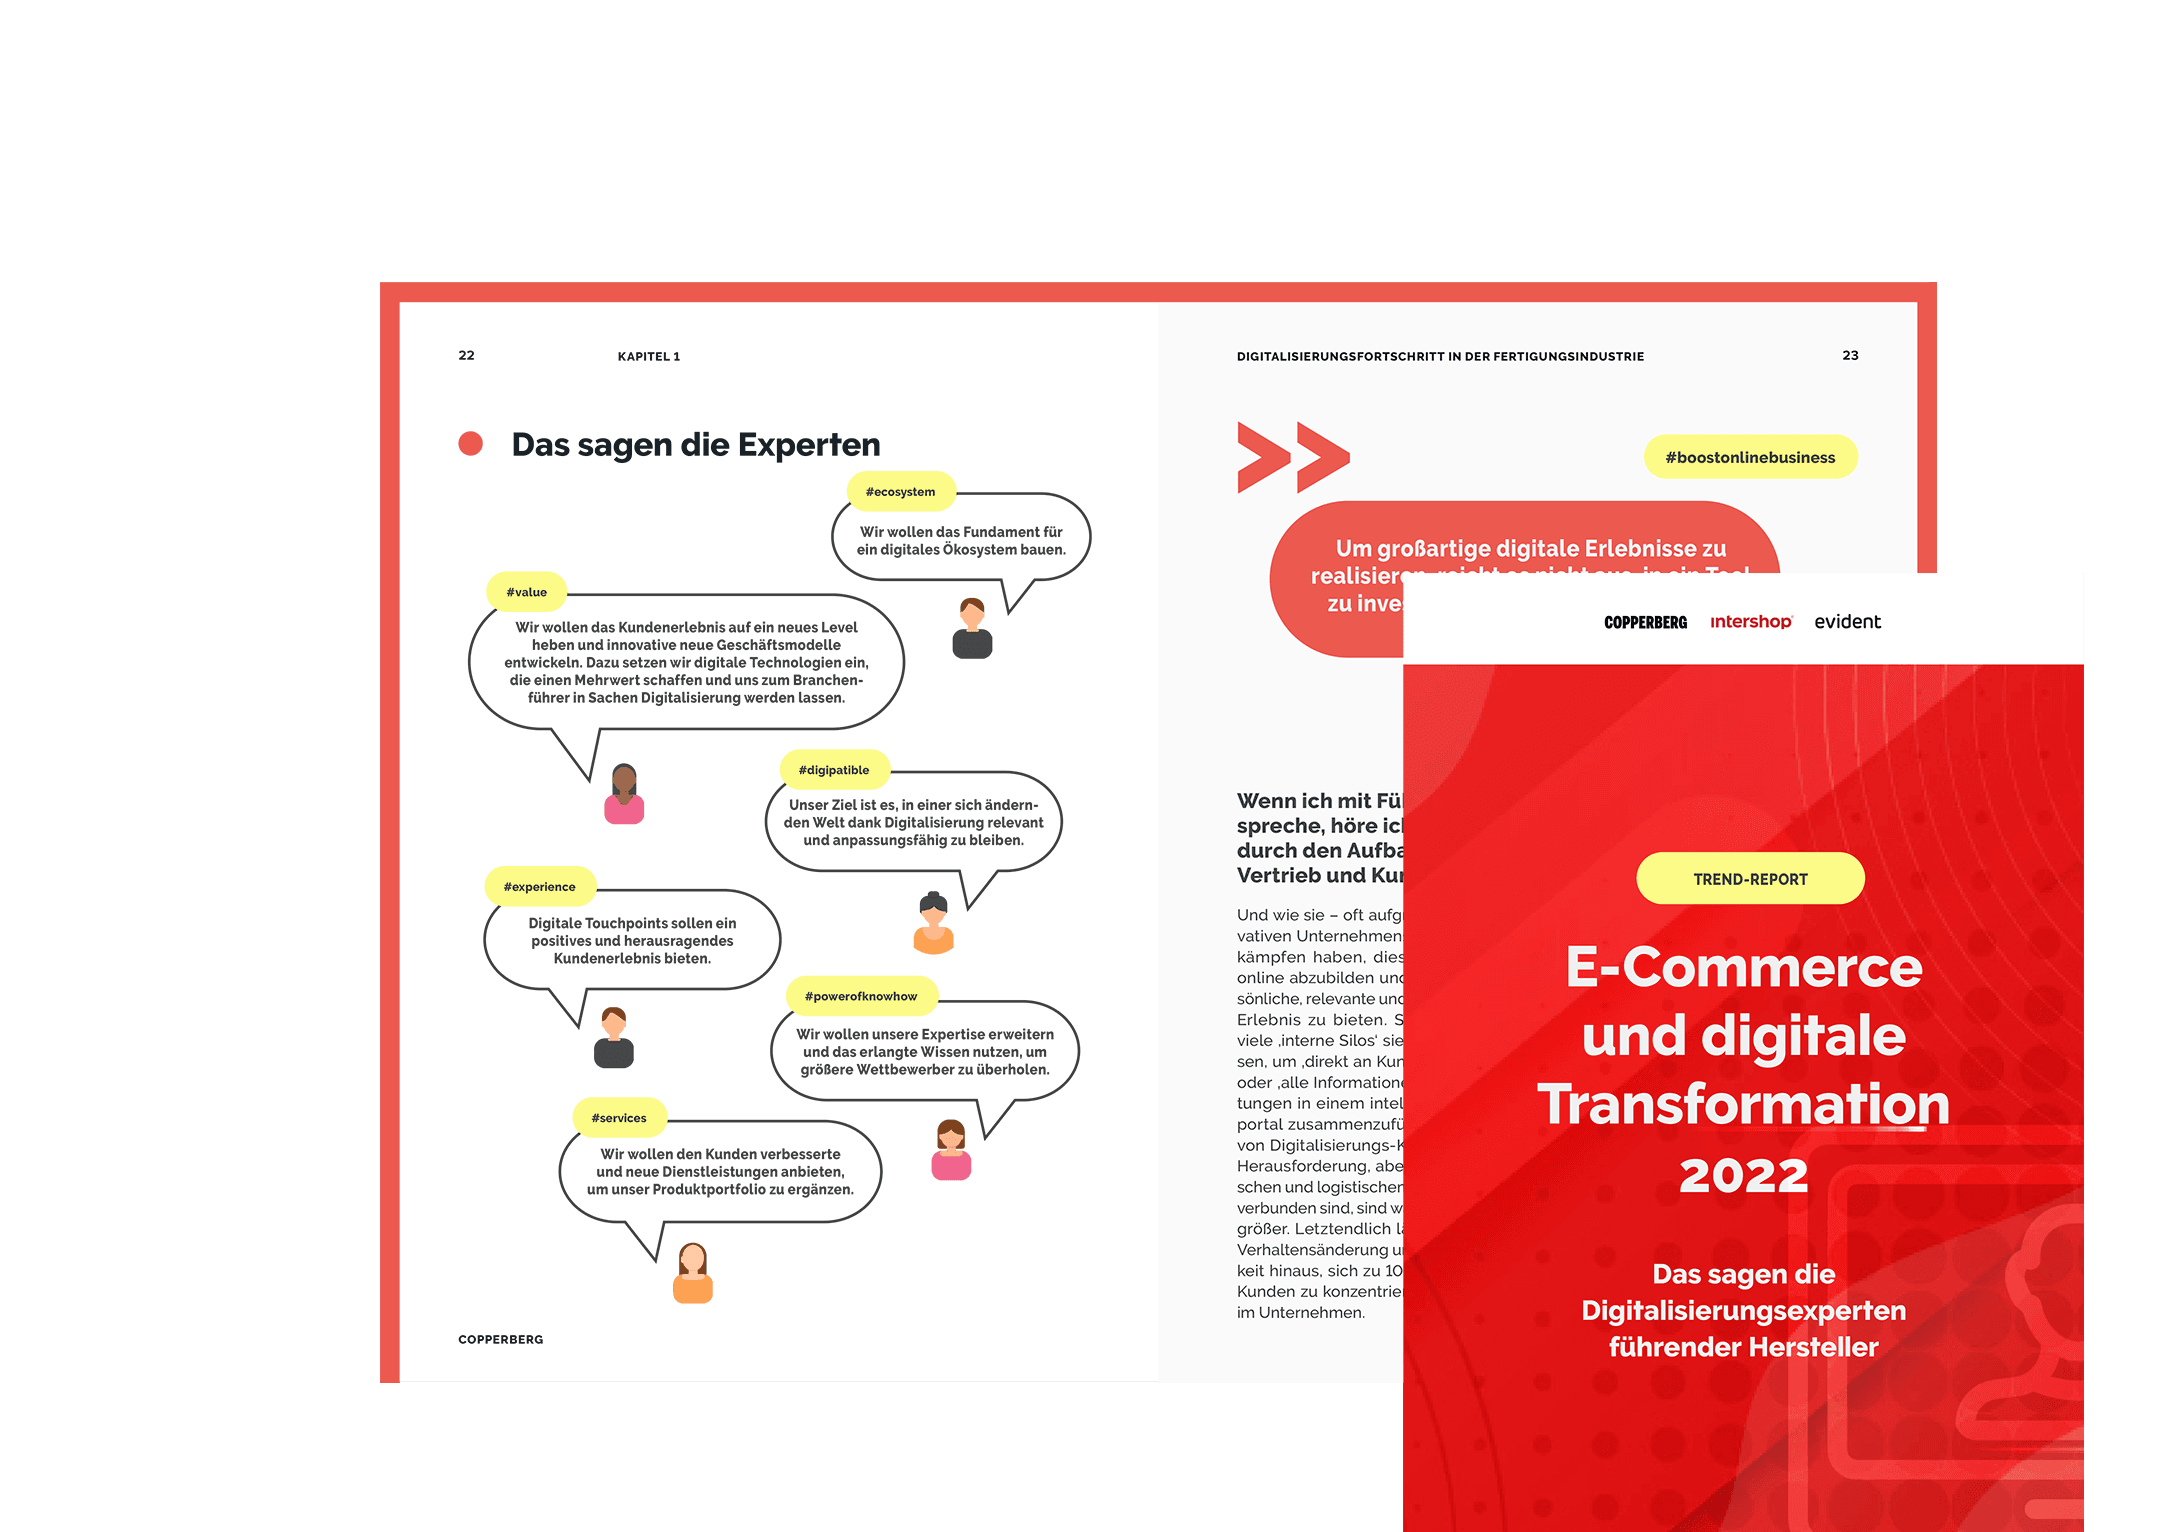 Intershop Trend-Report: E-Commerce und digitale Transformation 2022